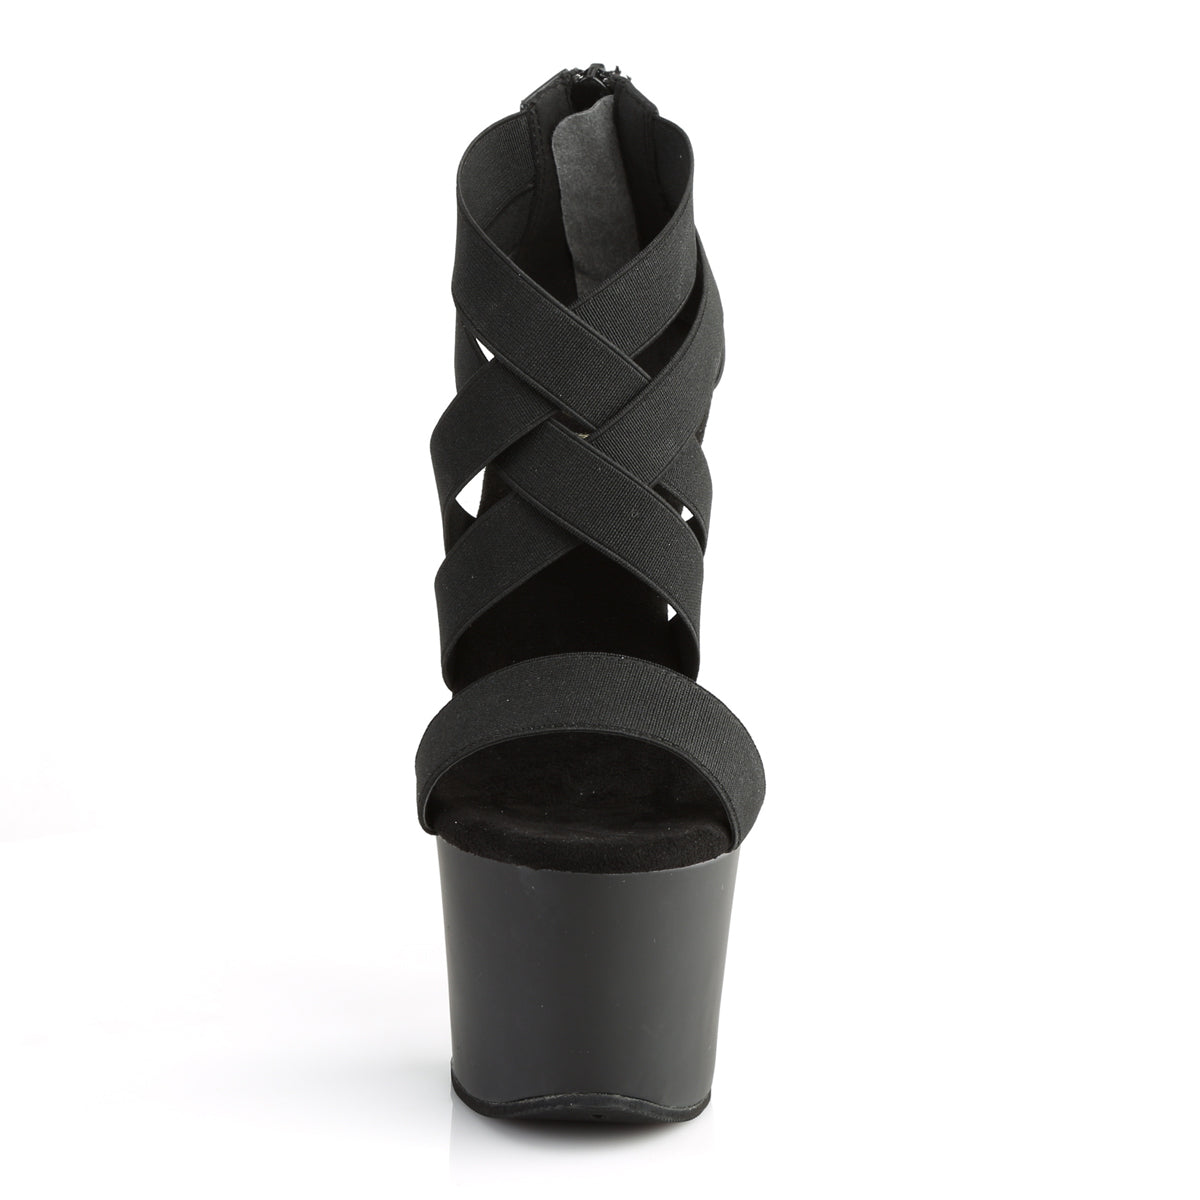 SKY-369 Pleaser 7 Inch Heel Black Pole Dancing Platforms-Pleaser- Sexy Shoes Alternative Footwear